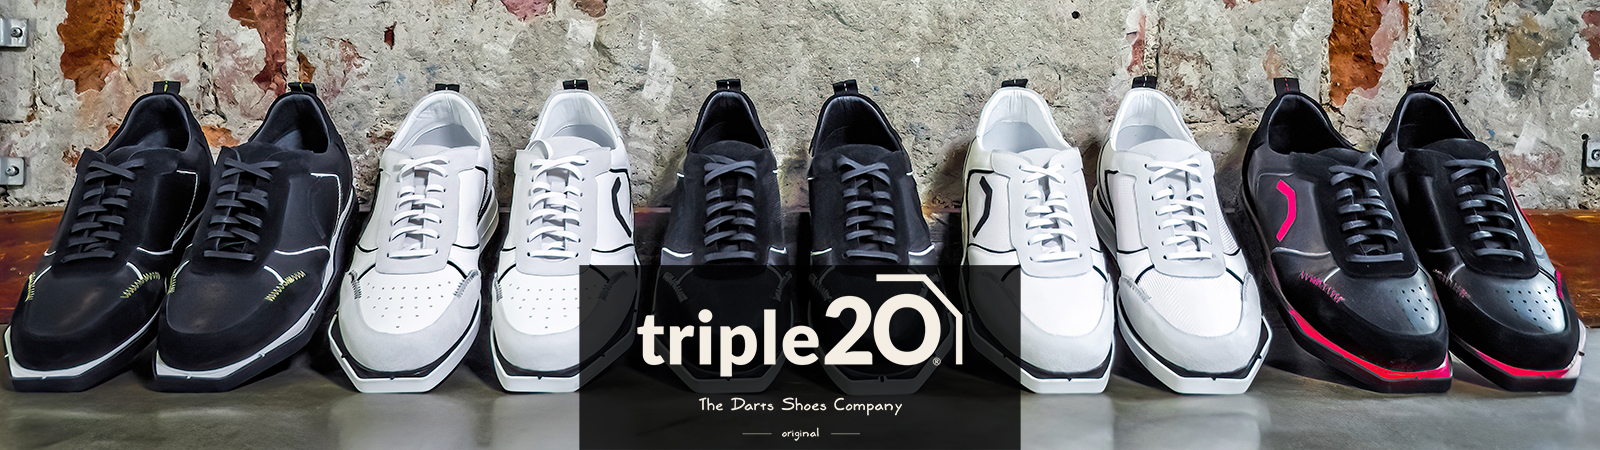 triple20-dartsshoes-dartschuhe-made-in-germany